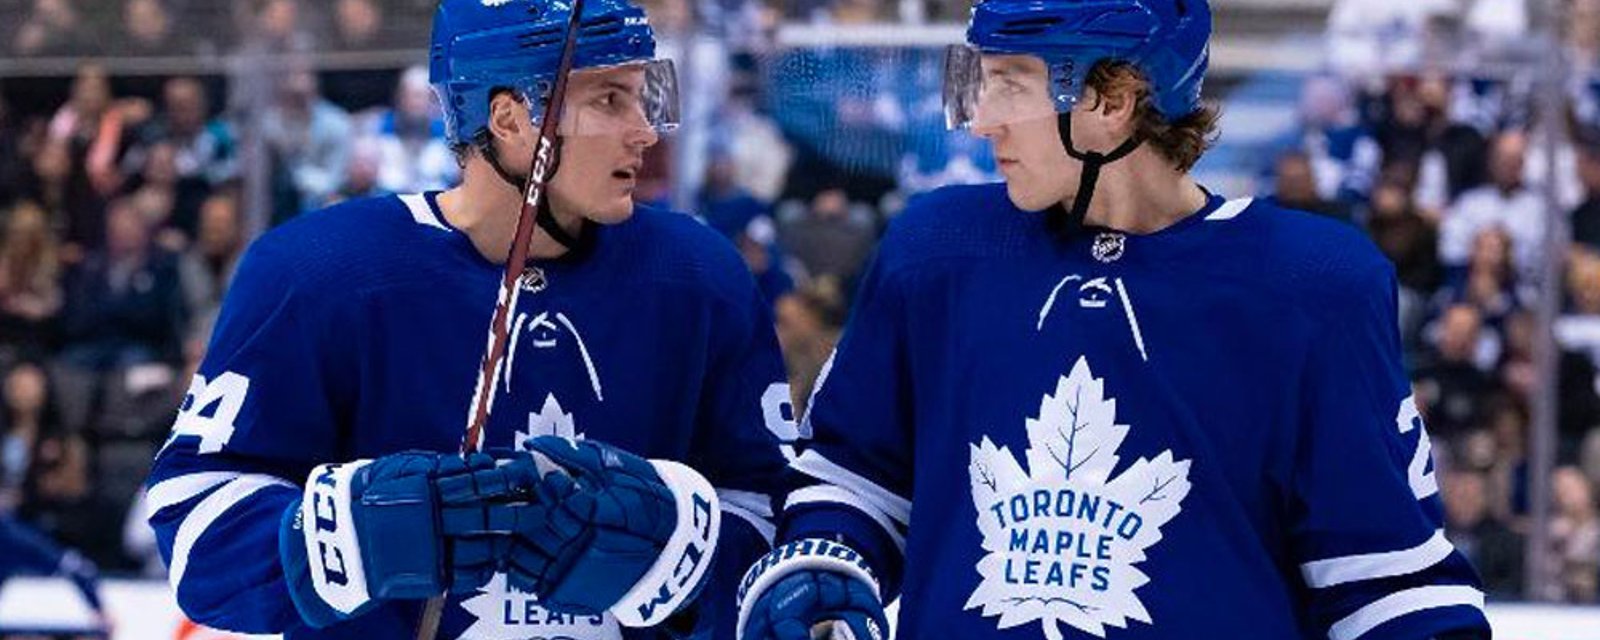 Maple Leafs setting up for trade despite NHL shutdown 